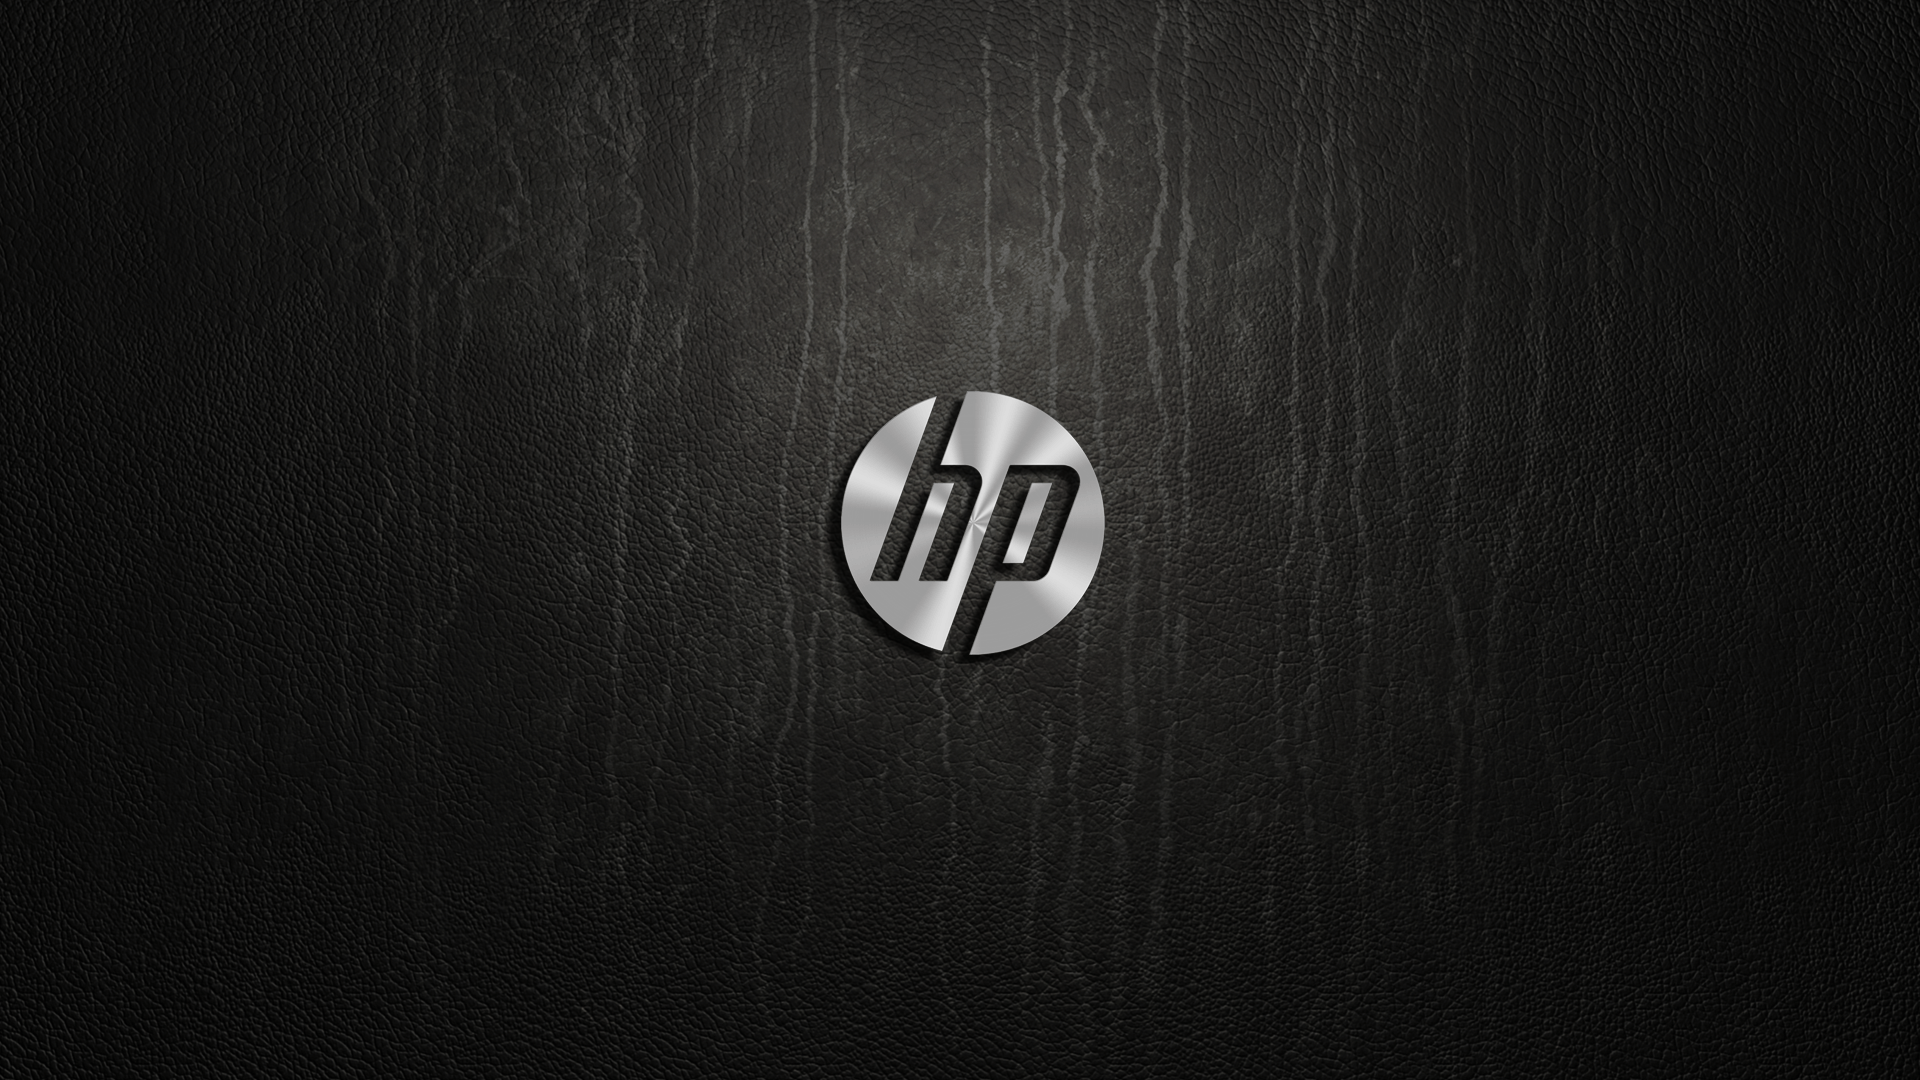 Hewlett Packard Full HD Wallpaper And Background Imagex1080